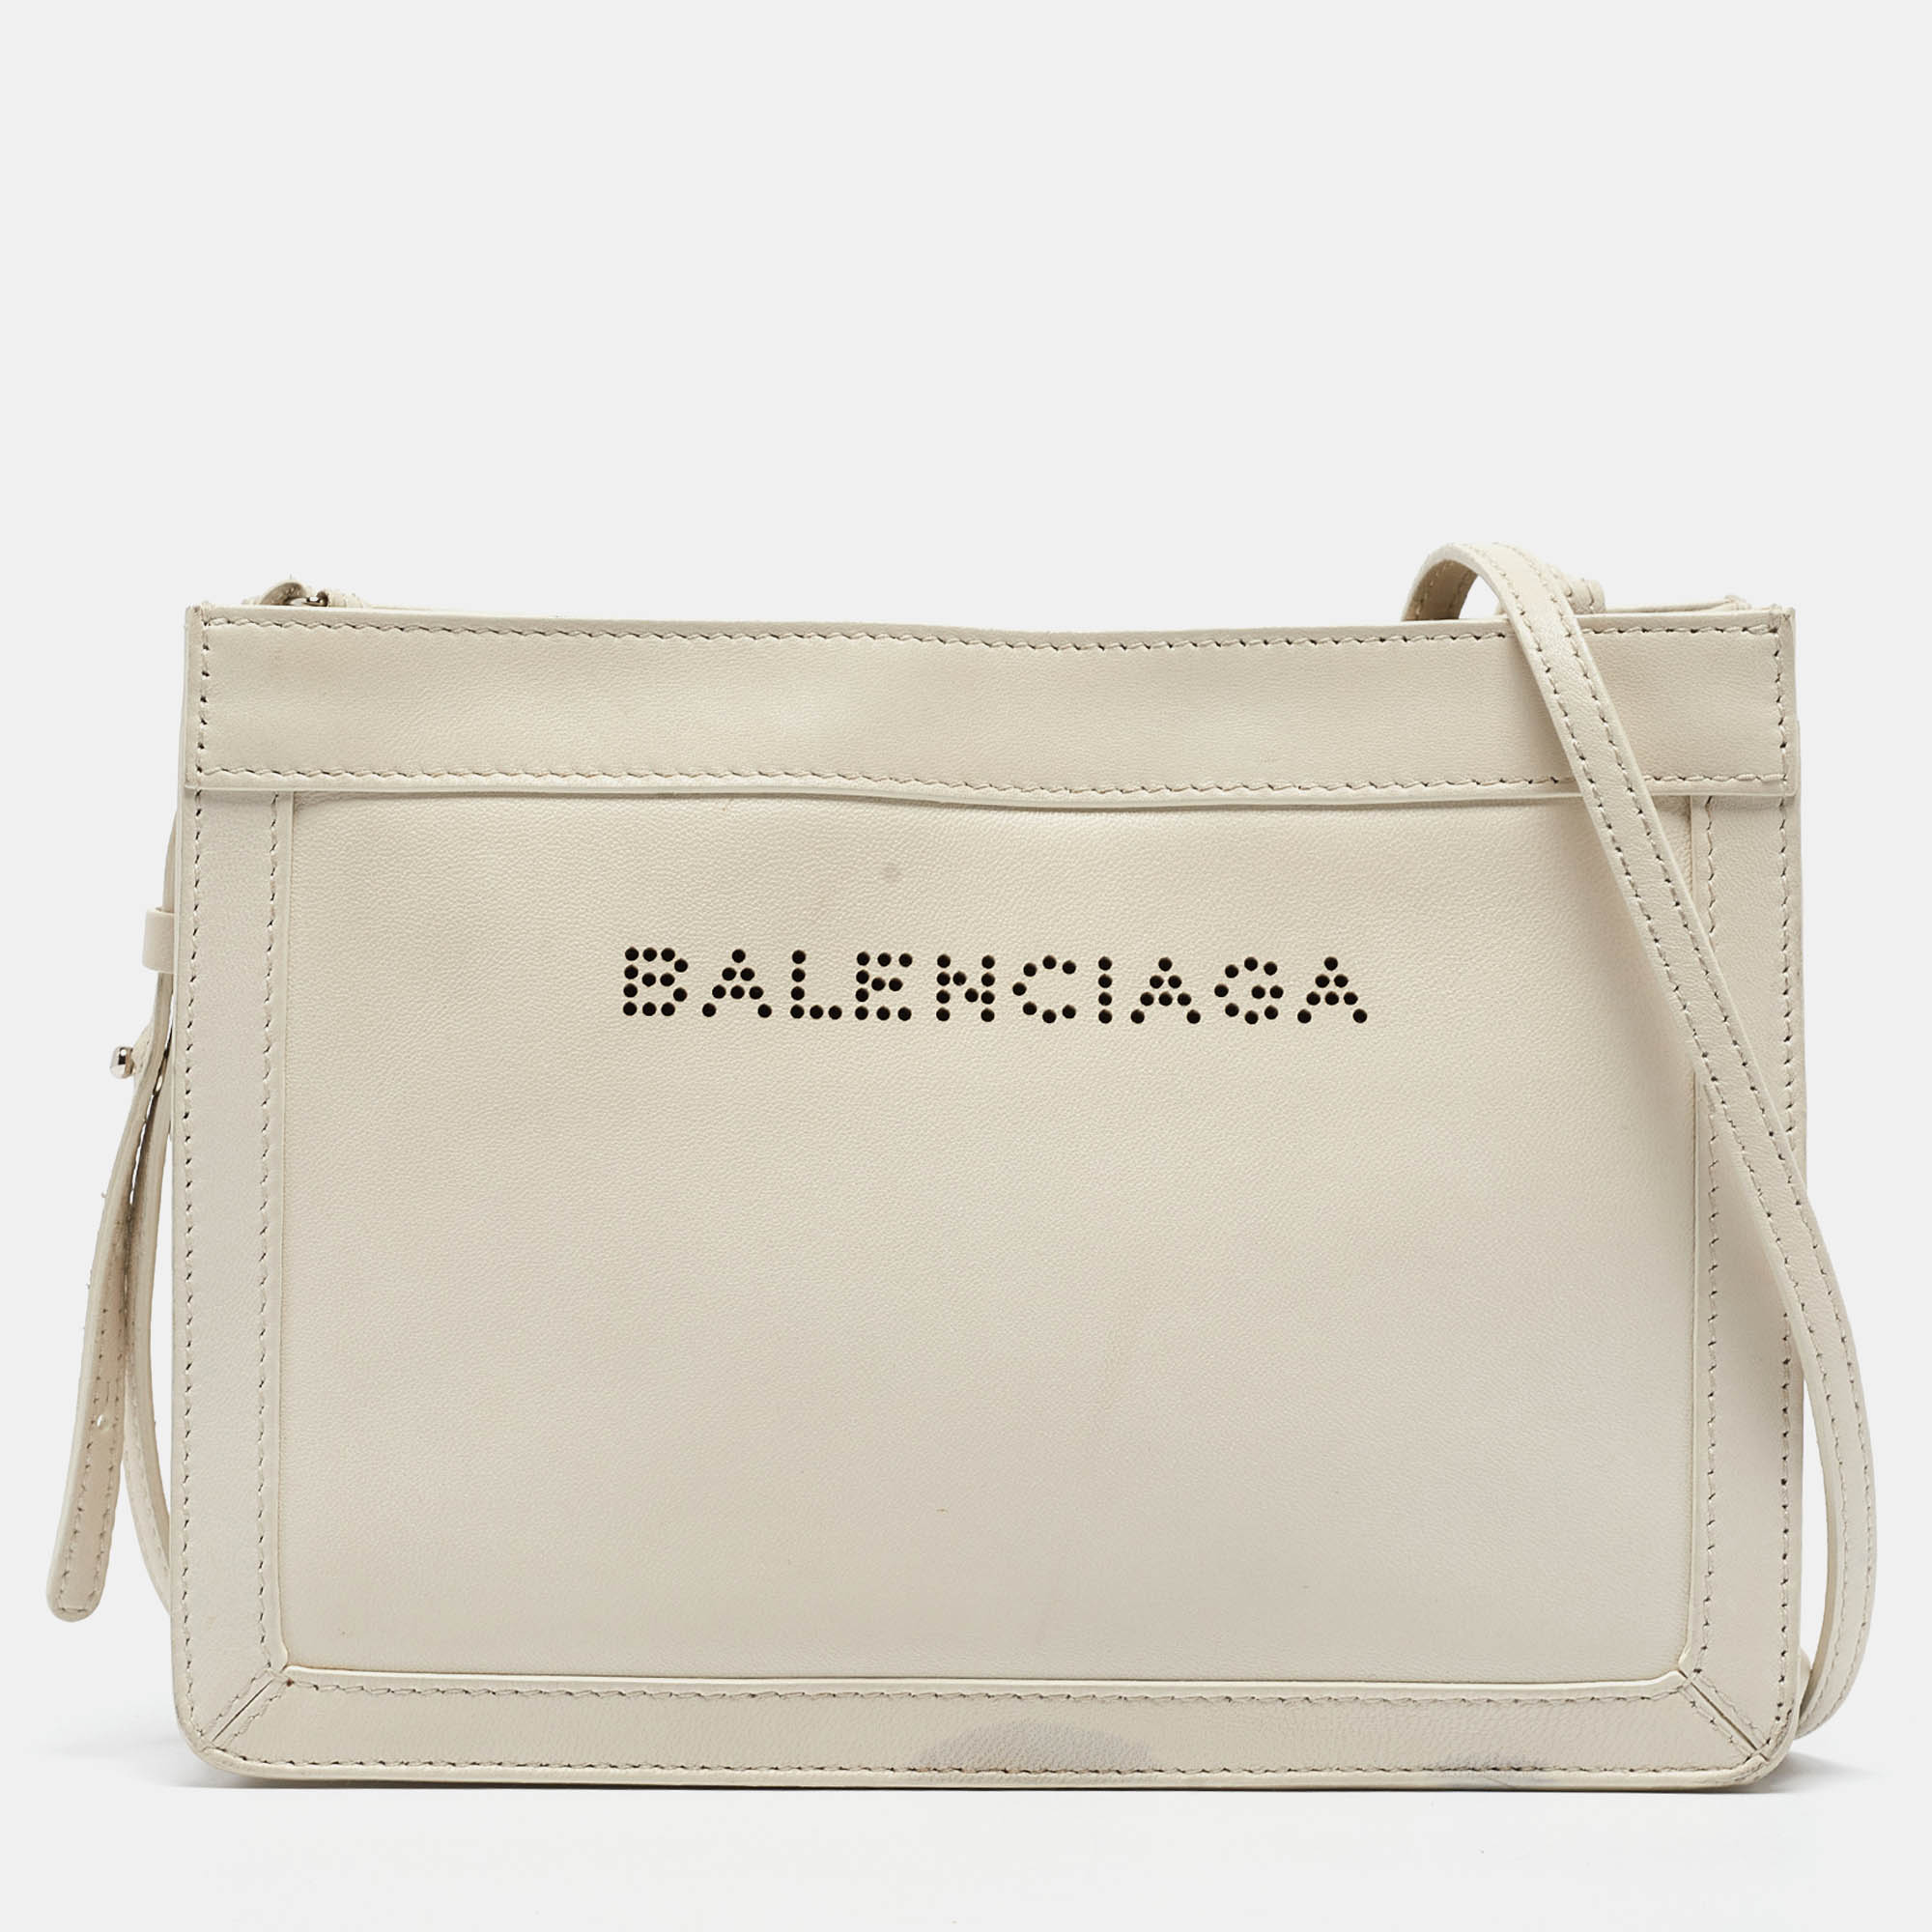 Balenciaga off white leather perforated logo pochette bag